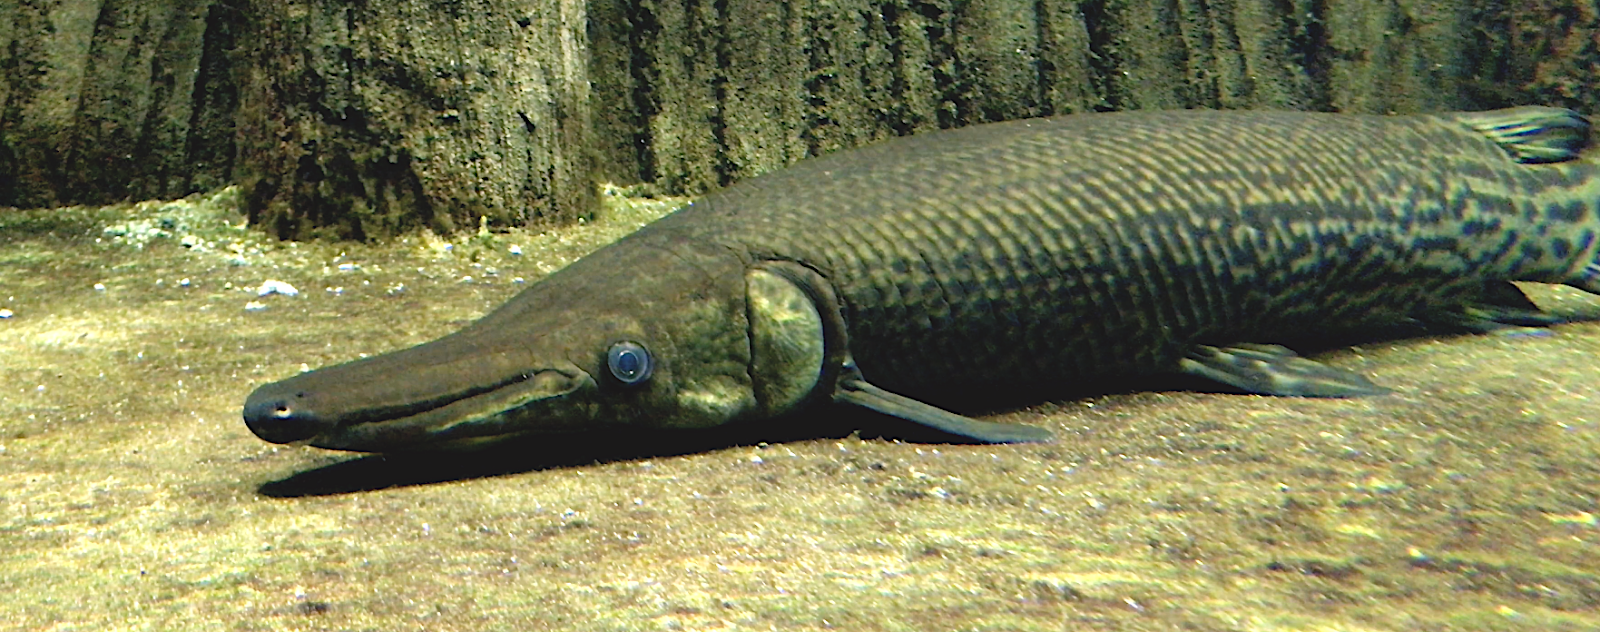 Aquarium Movies Japan Archive 生きている魚図鑑 アリゲーターガー Alligator Gar Atractoateus Spatula